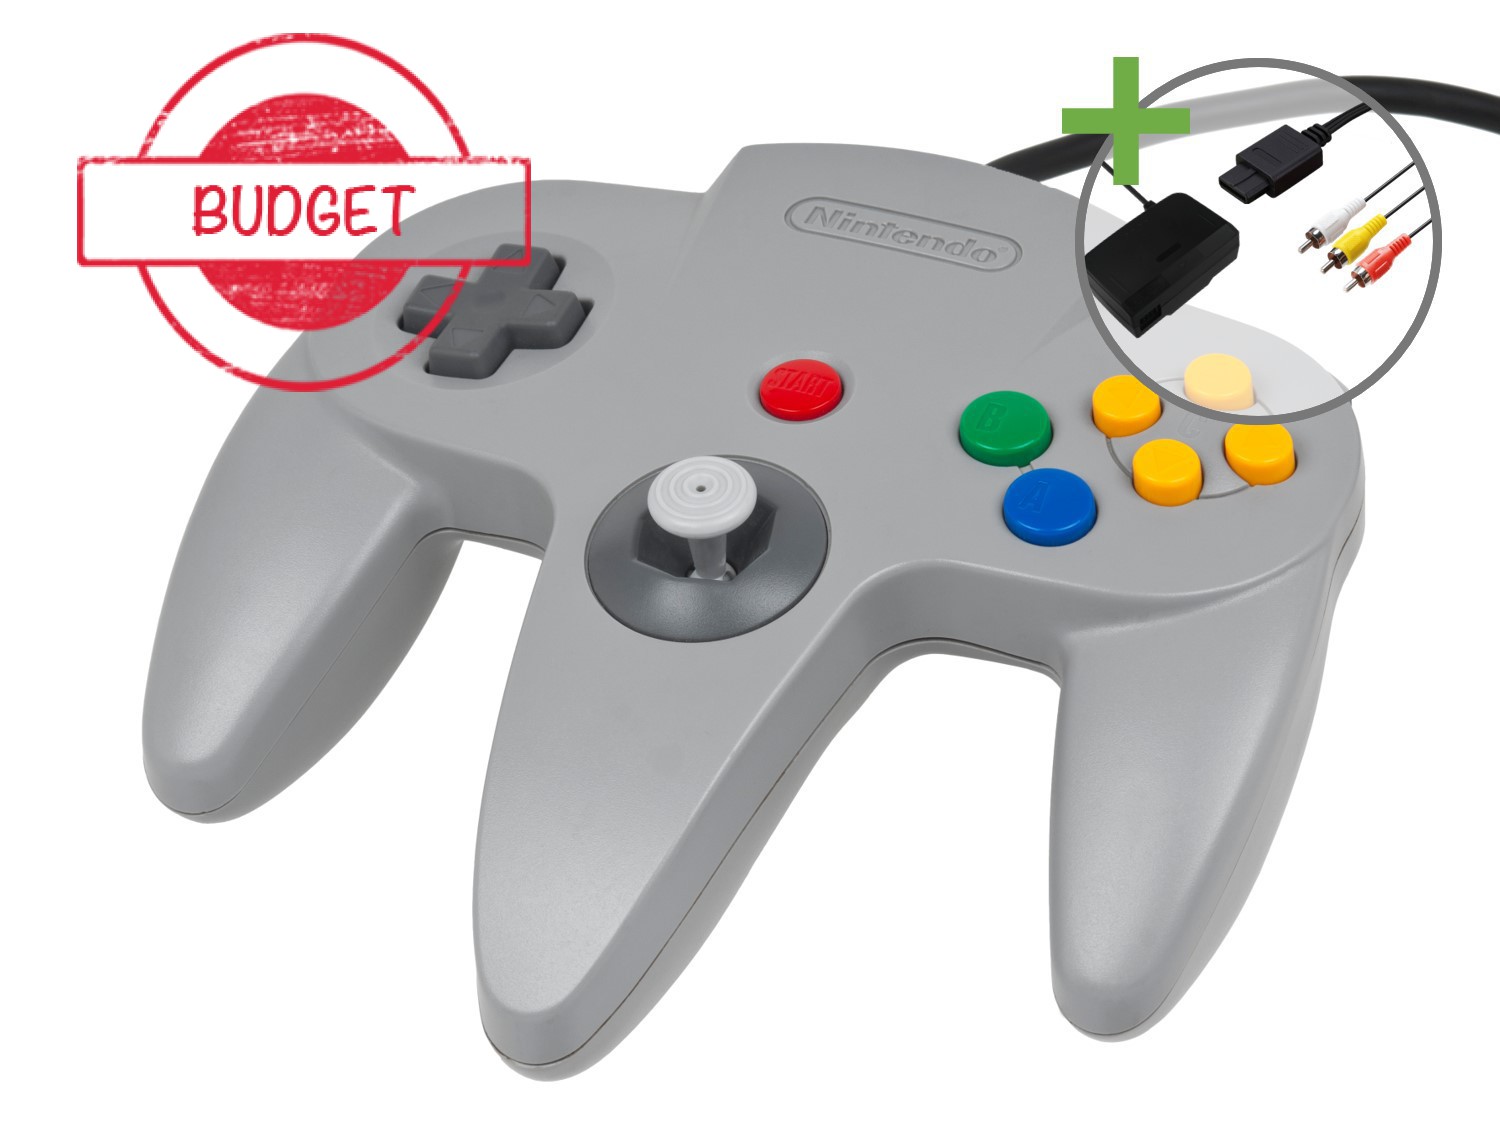 Nintendo 64 Starter Pack - Super Mario 64 Edition - Budget - Nintendo 64 Hardware - 3